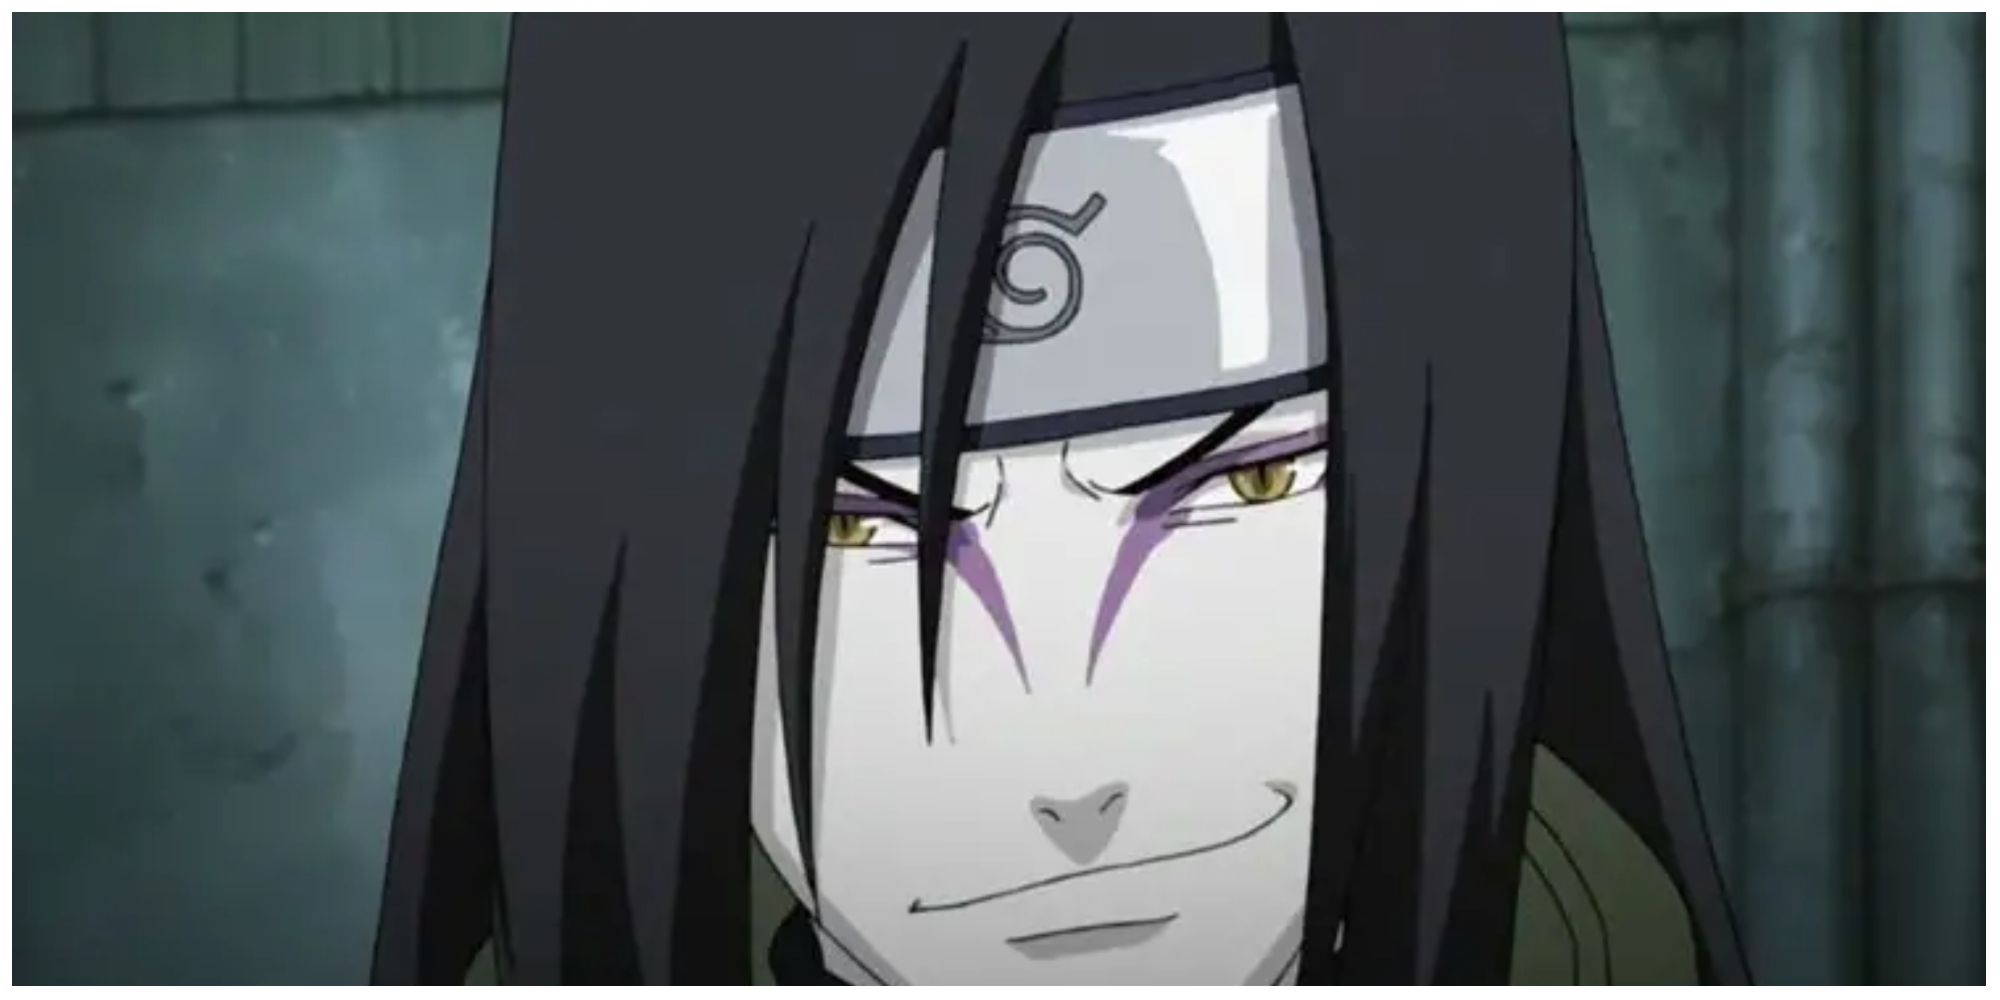 Orochimaru smiling as a Leaf Ninja in Naruto.